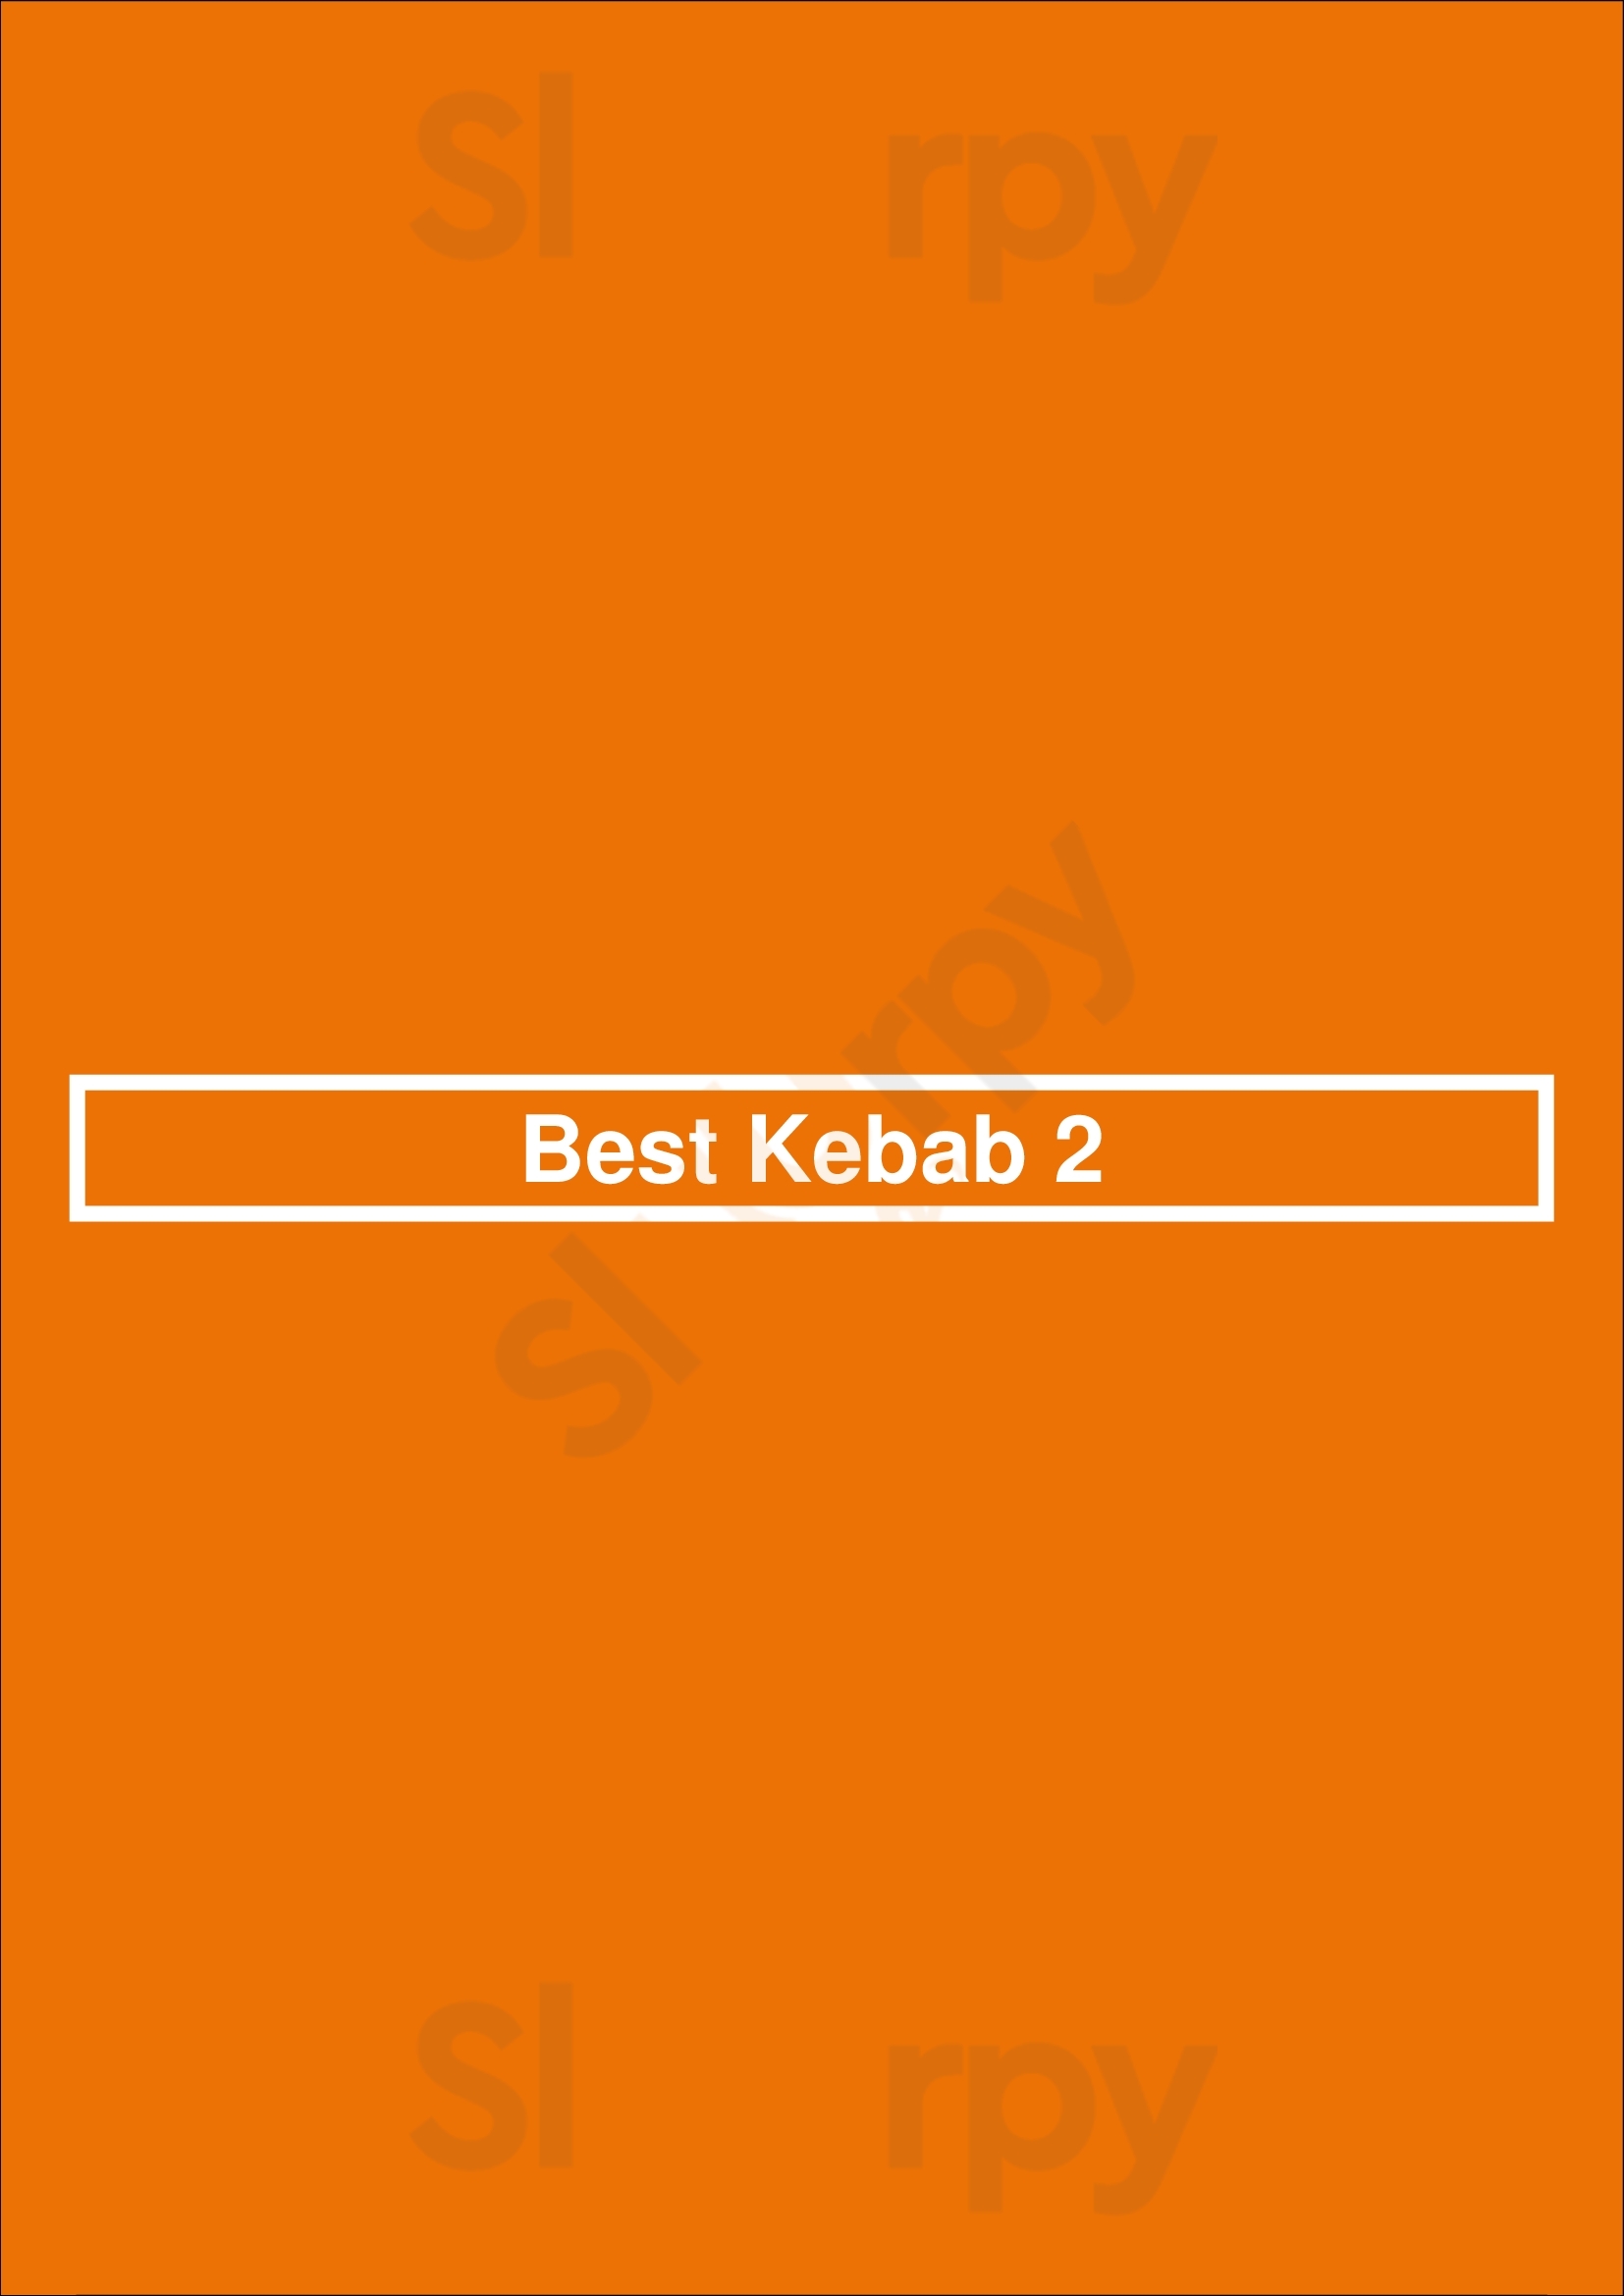 Best Kebab 2 Darlington Menu - 1